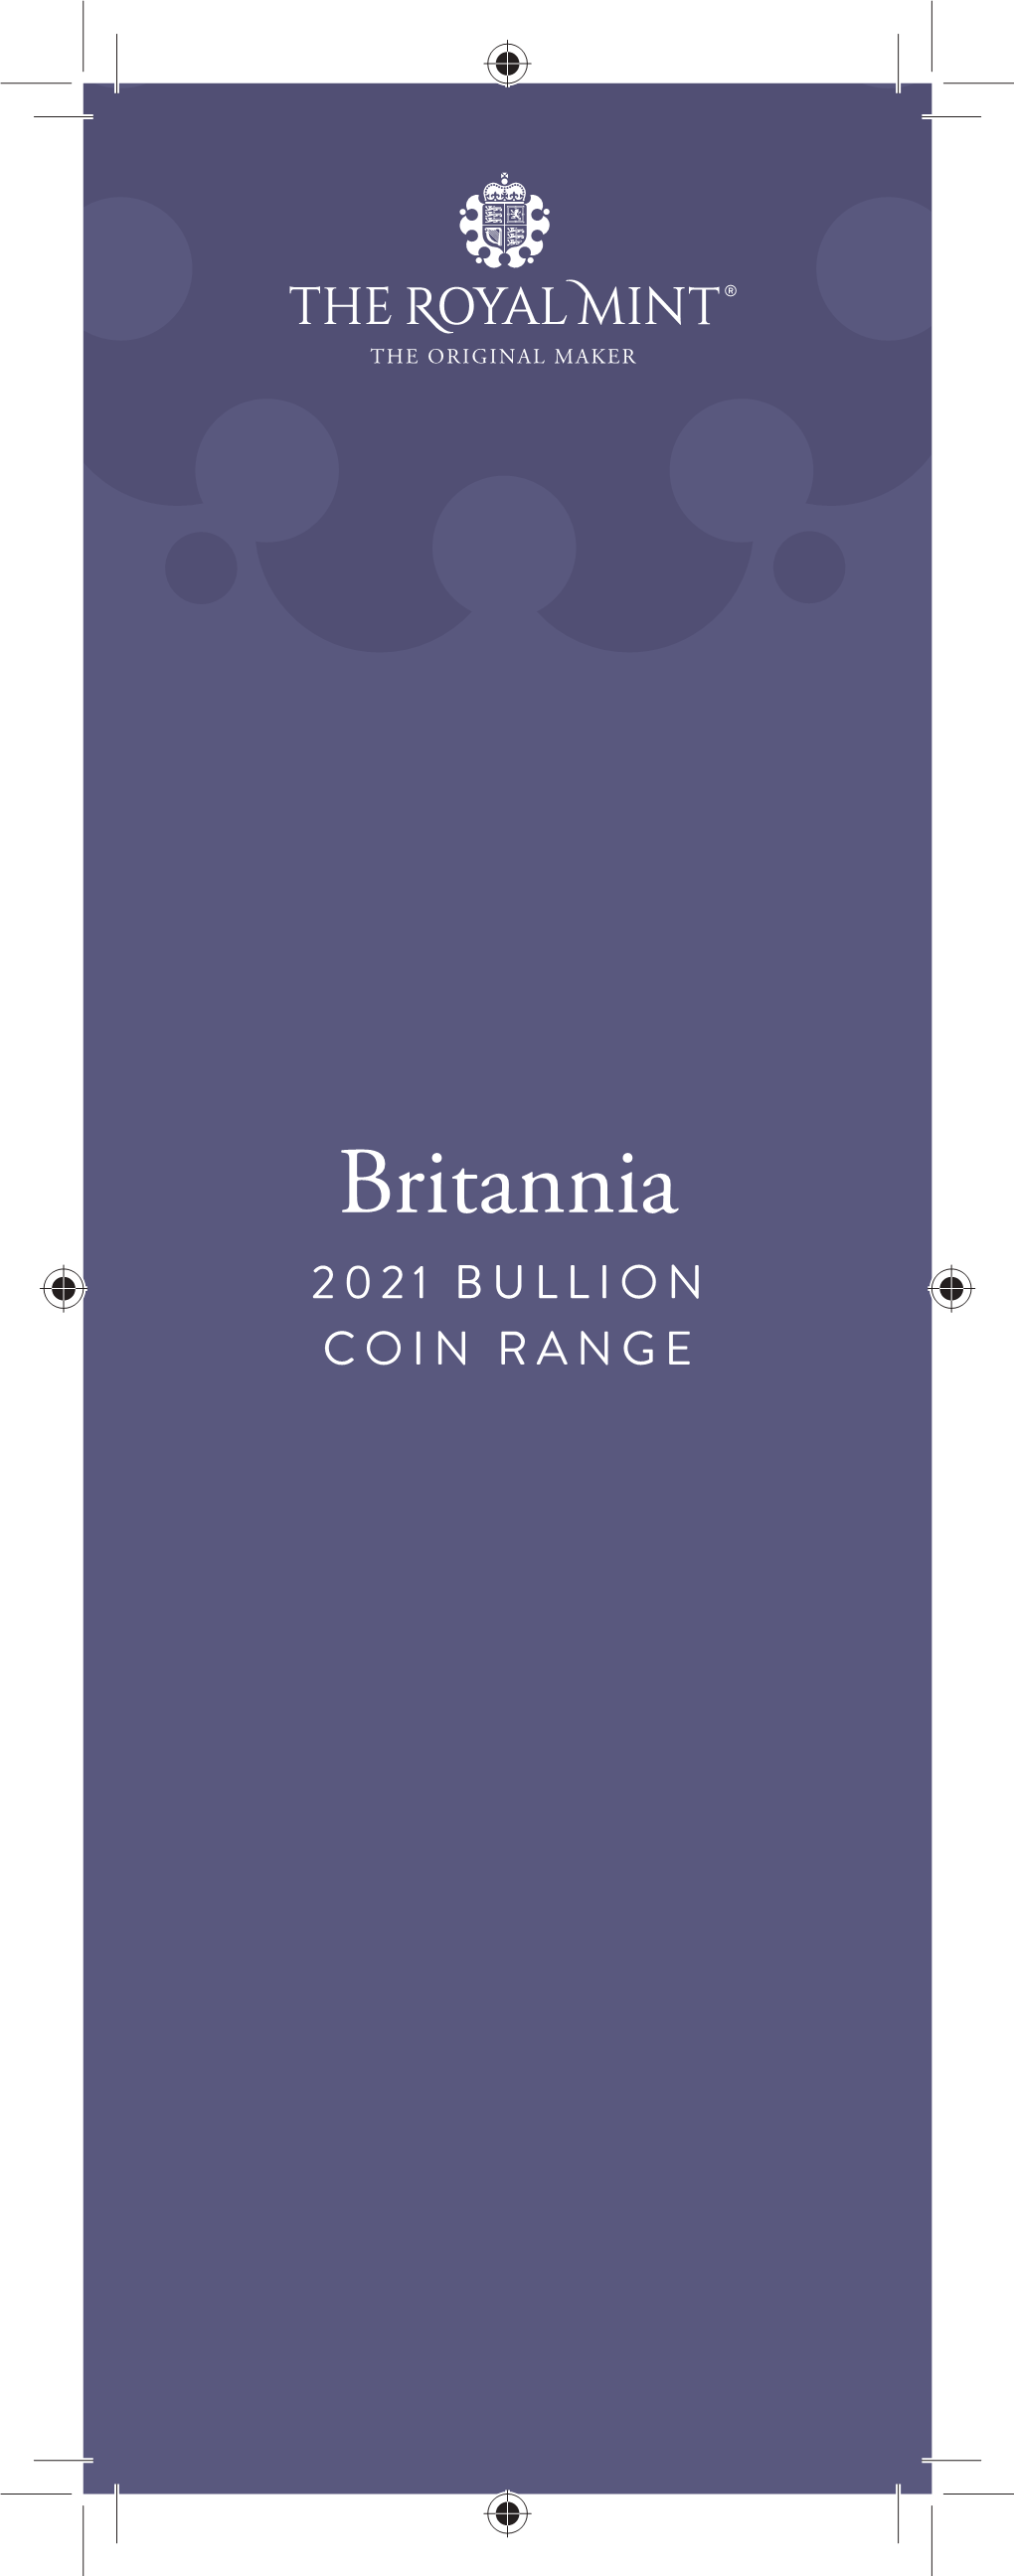 PJ01661 Bullion Britannia 2021 8PP Booklet D15 International PRINT.Indd